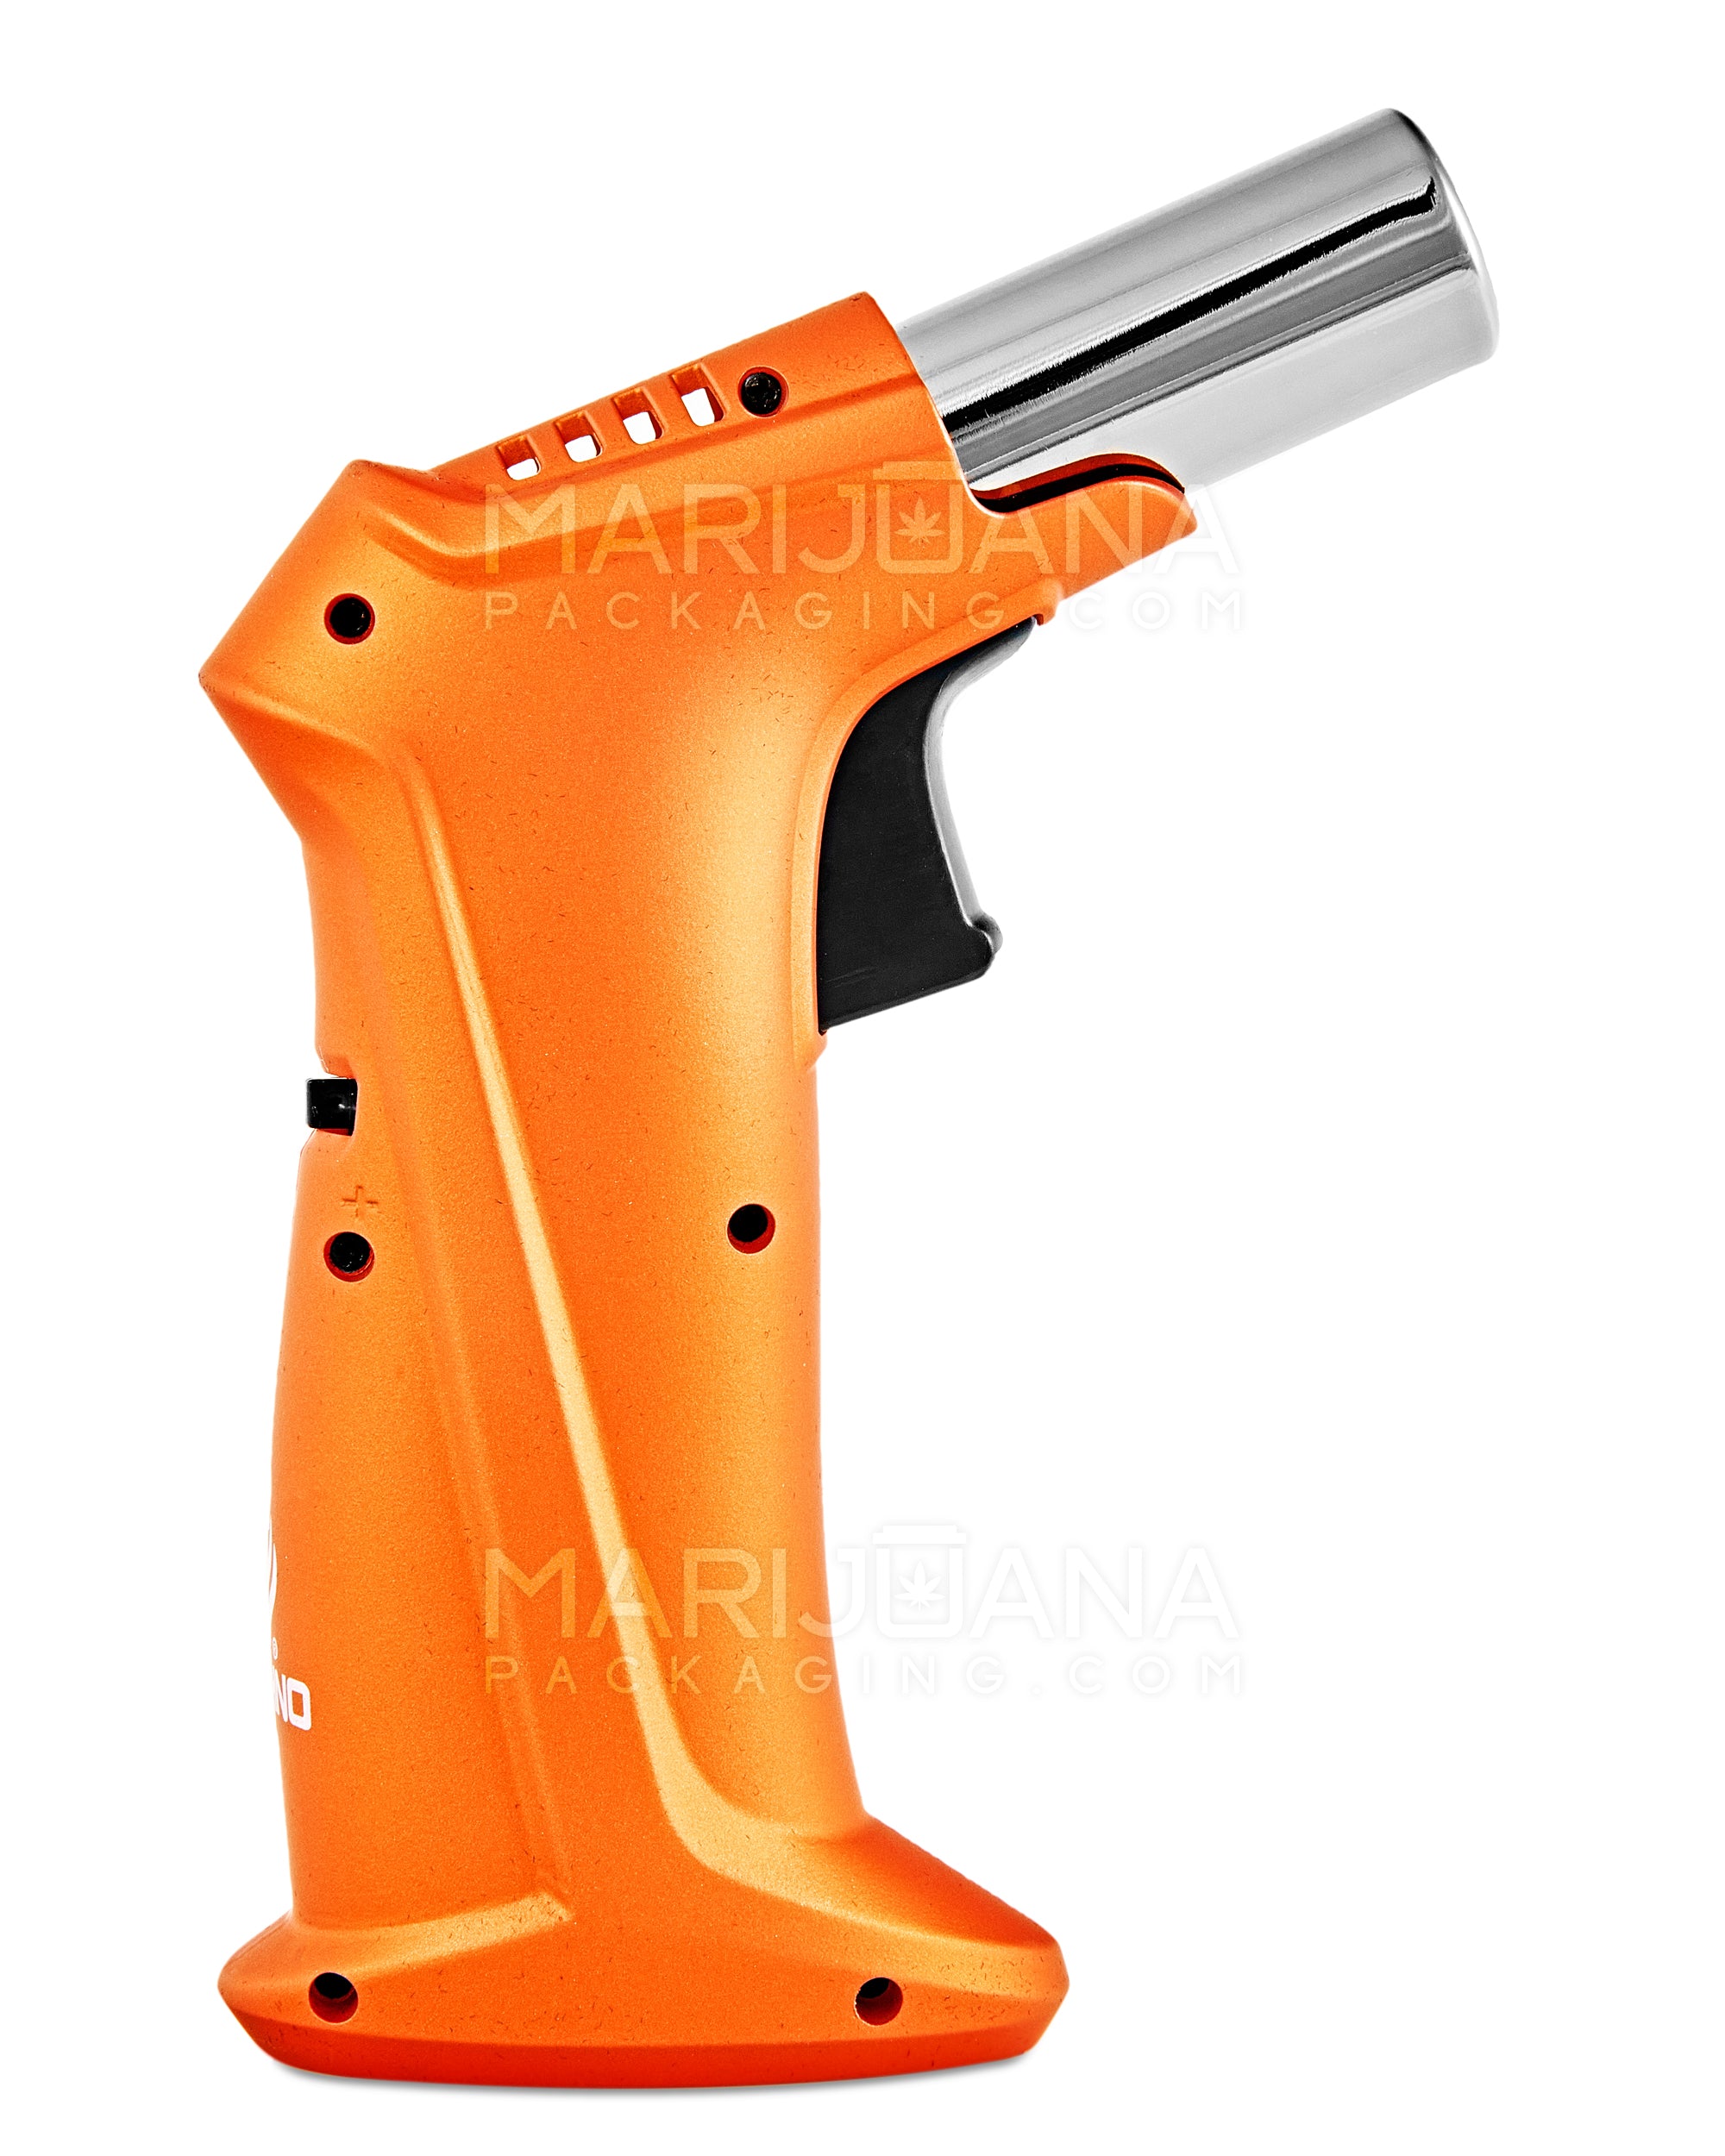 TECHNO | High Angle Metal Torch w/ Safety Lock | 6.5in Tall - Butane - Orange - 4